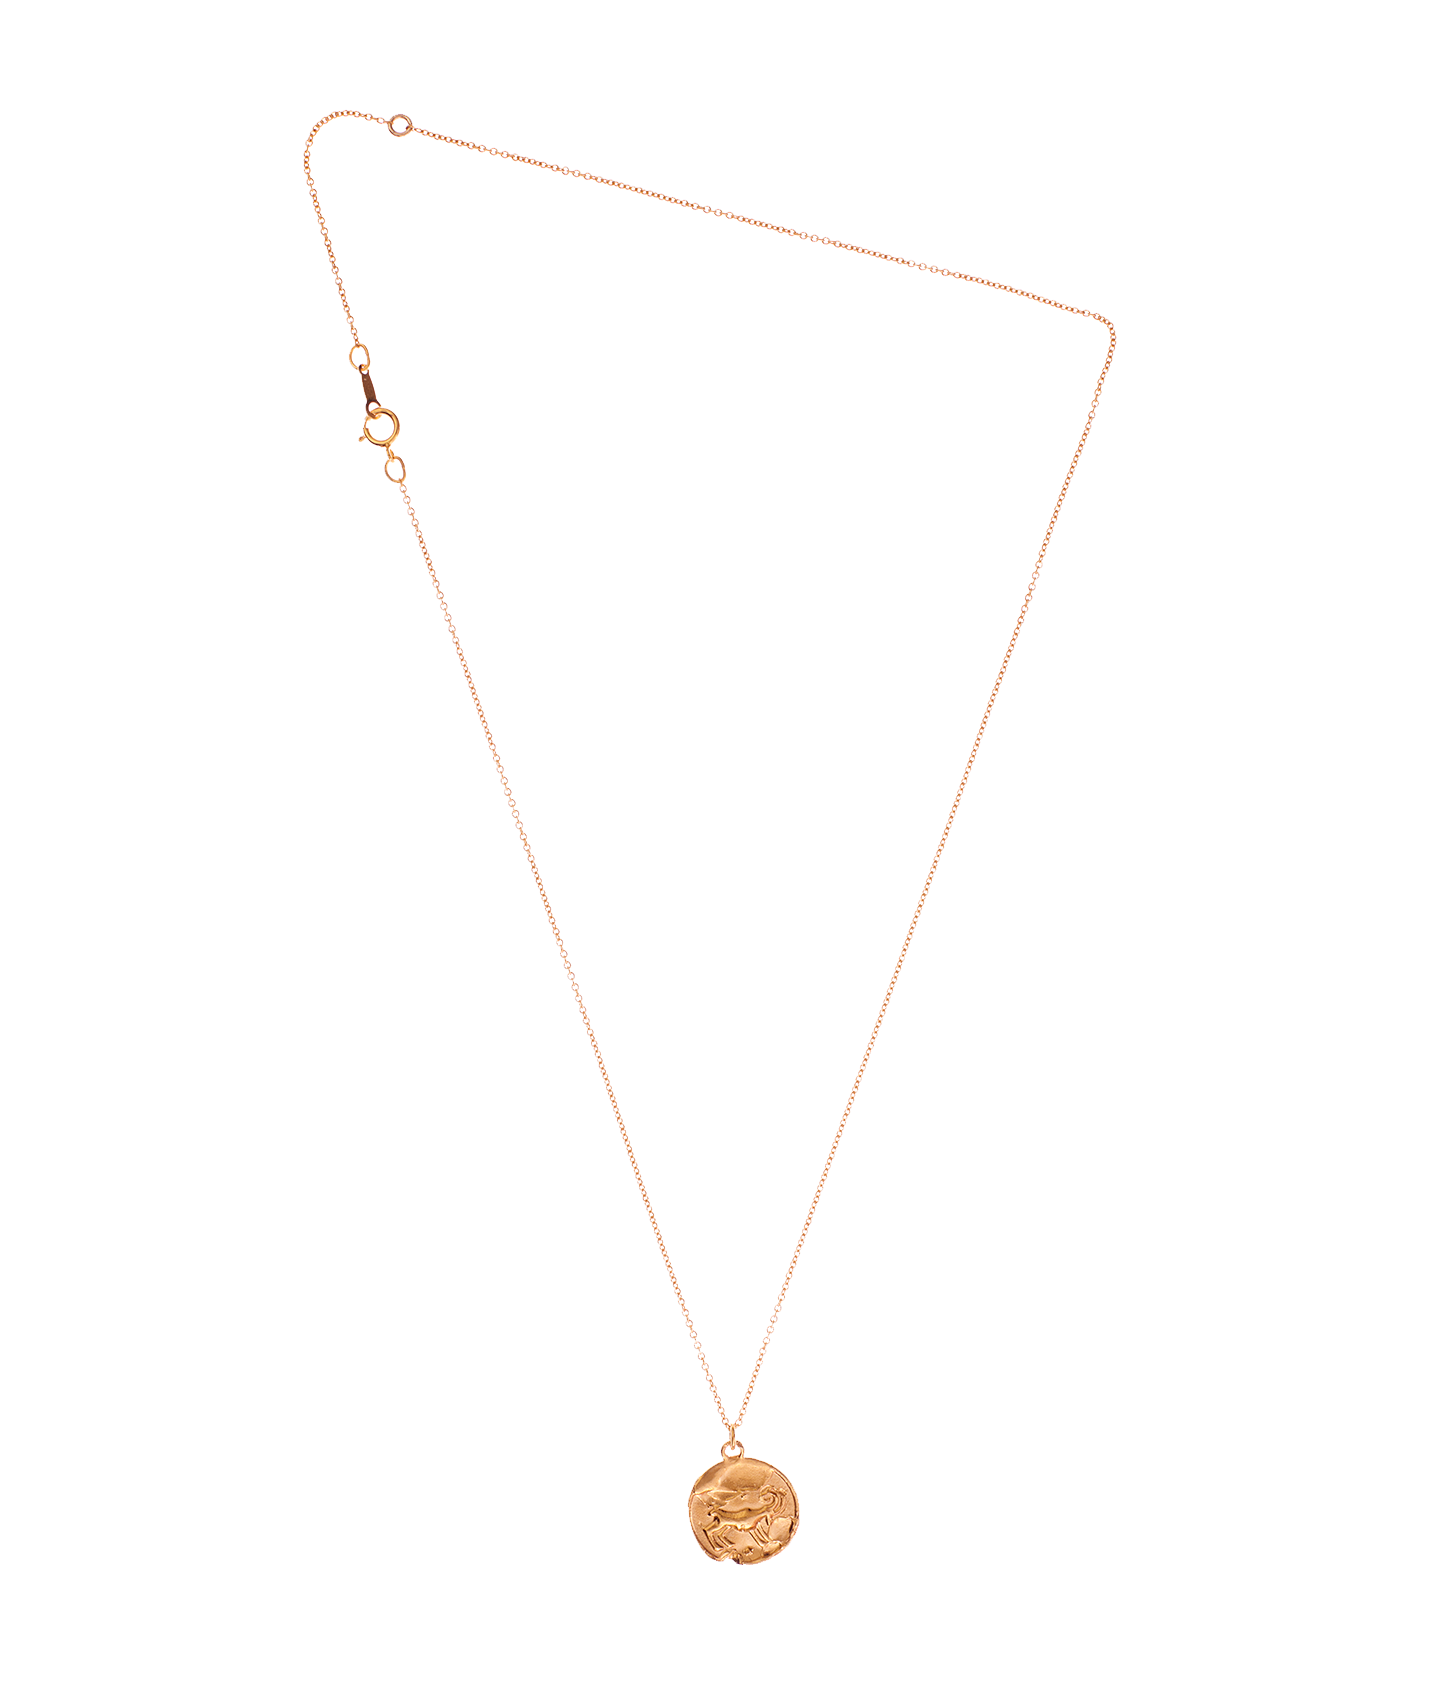 The Aries Medallion